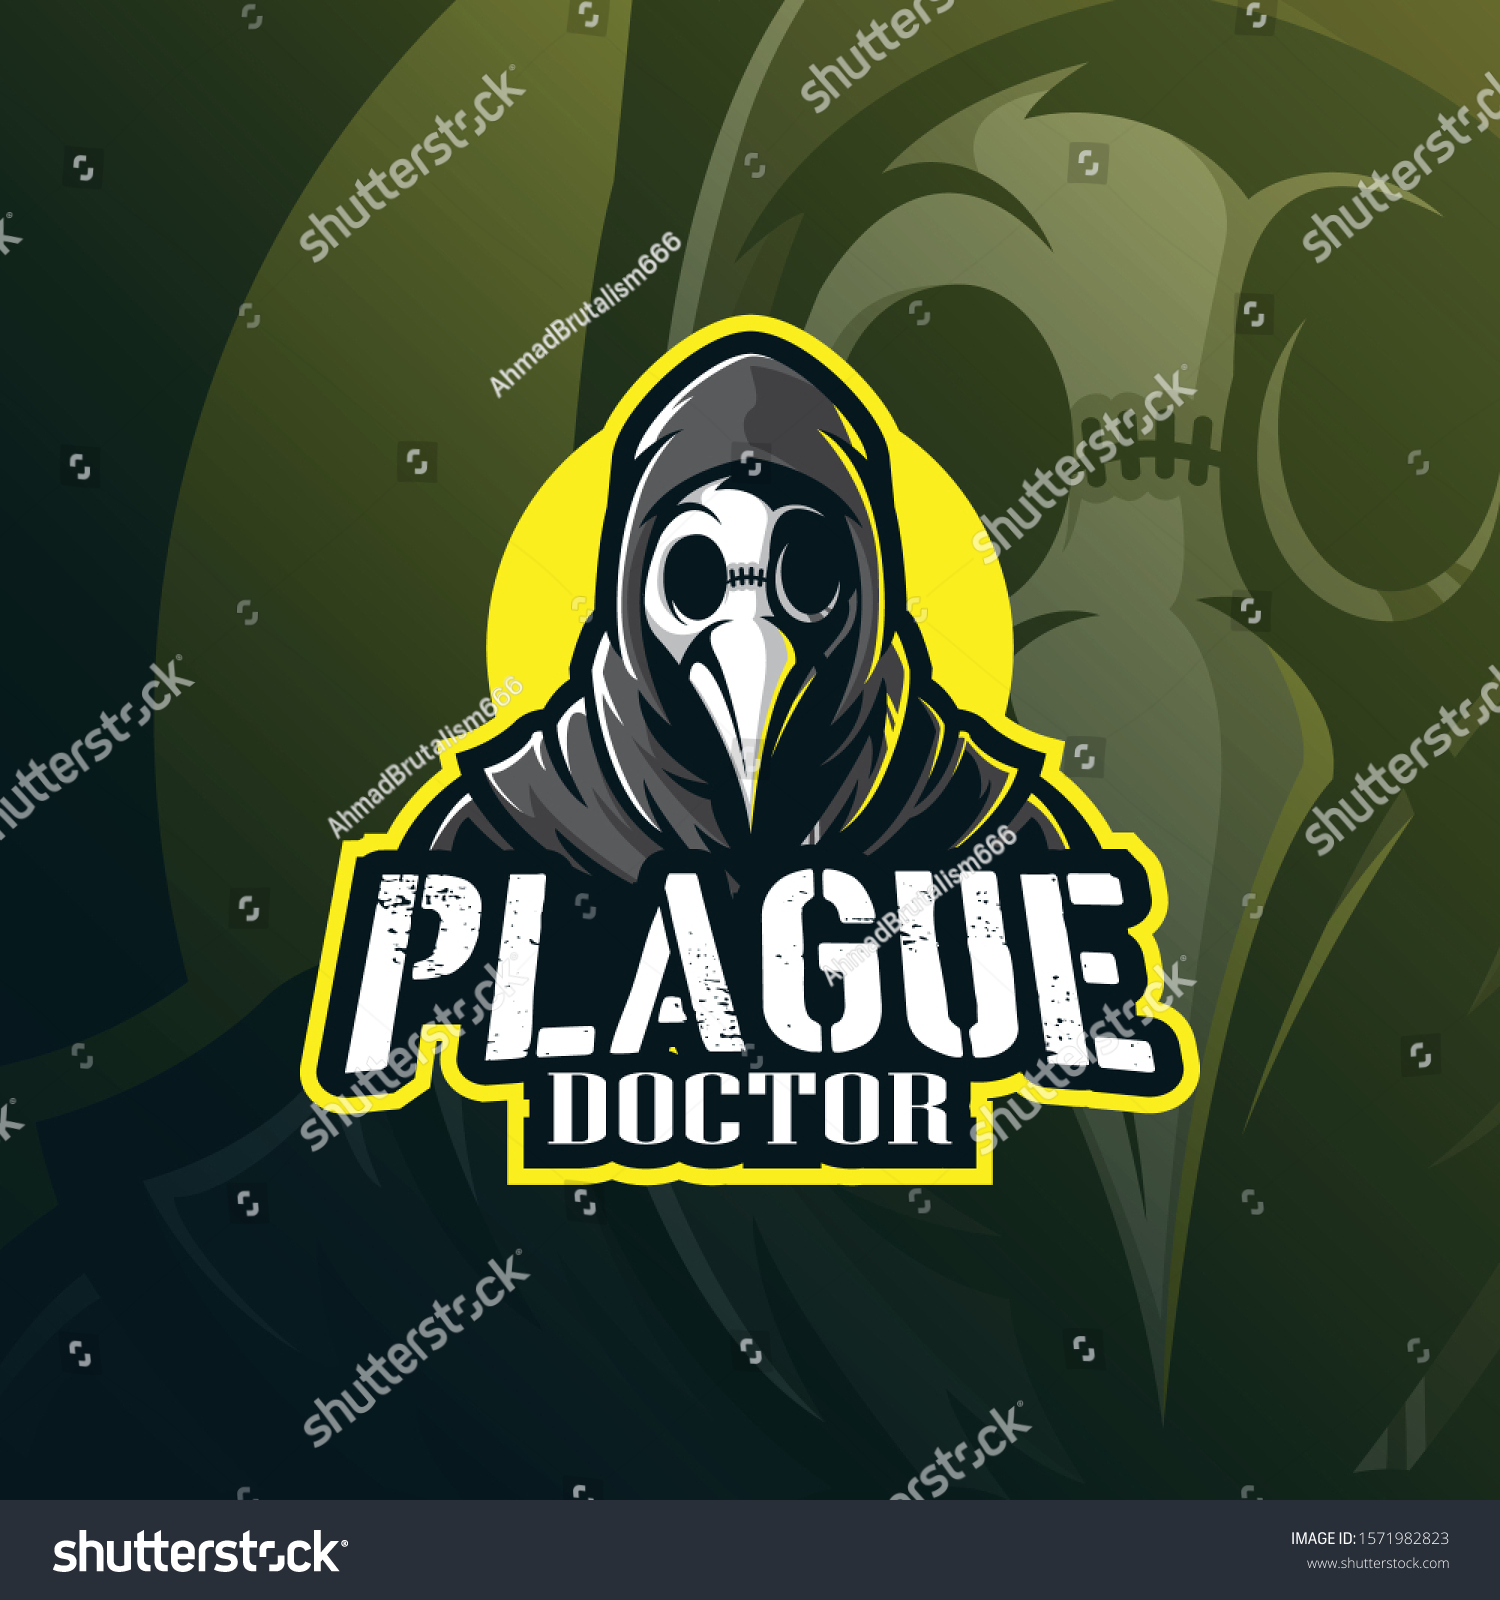 SVG of plague doctor mascot logo design vector with modern illustration concept style for badge, emblem and tshirt printing. doctor plague illustration for sport team. svg